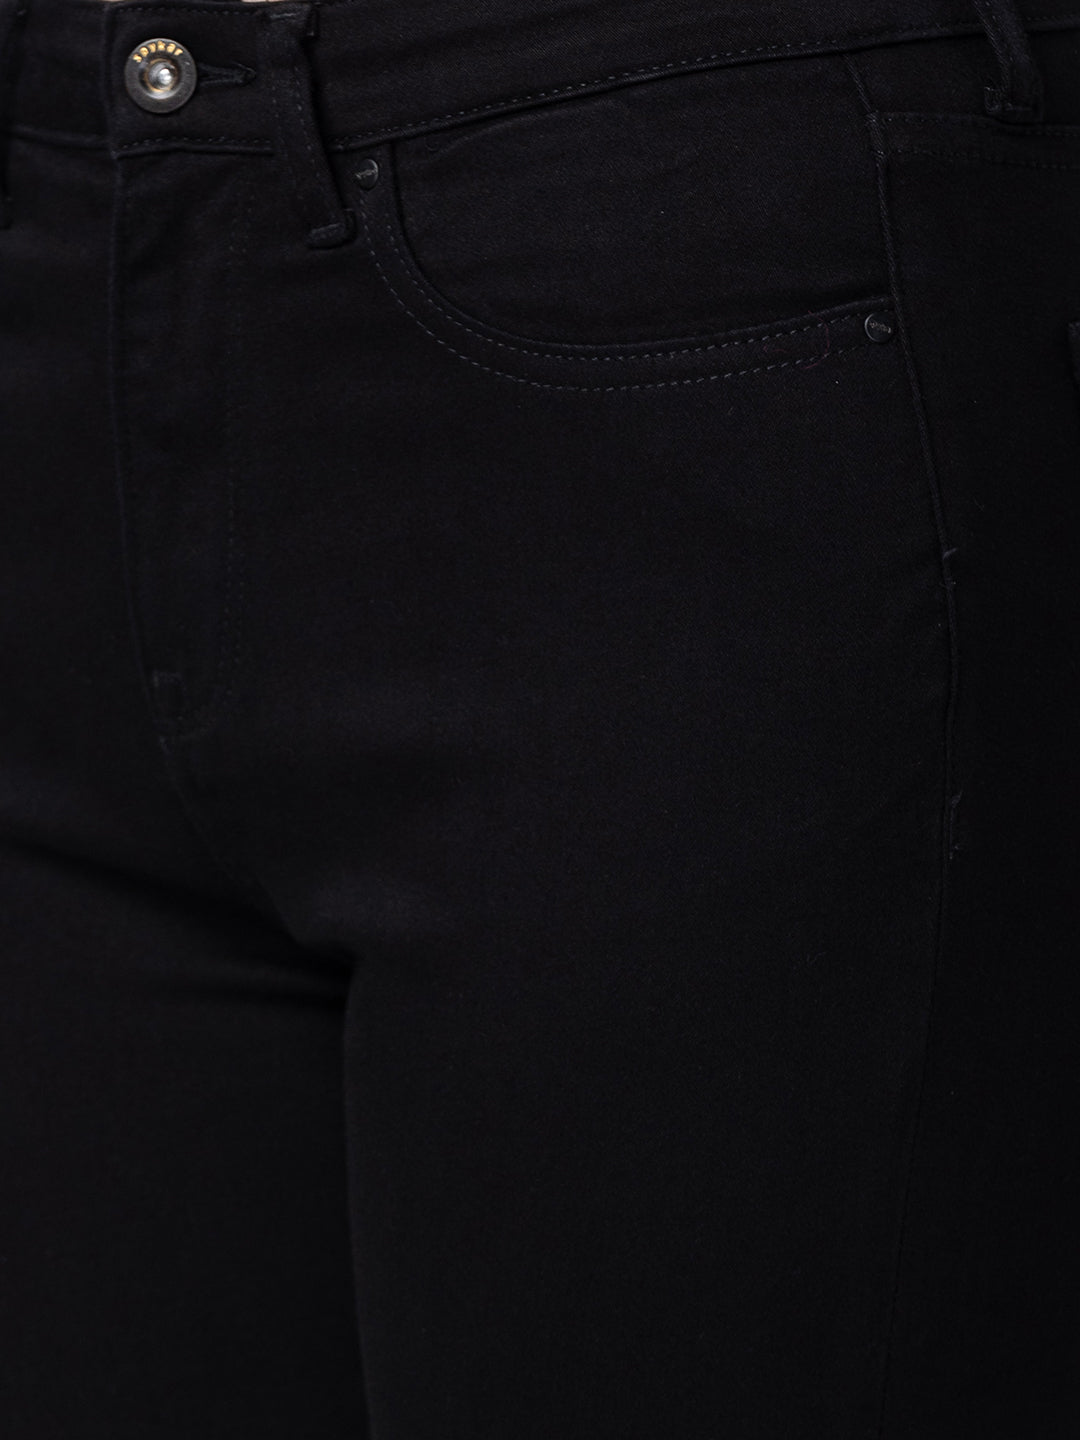 Spykar Women Black Cotton Super Skinny Ankle Length Jeans (Alexa)